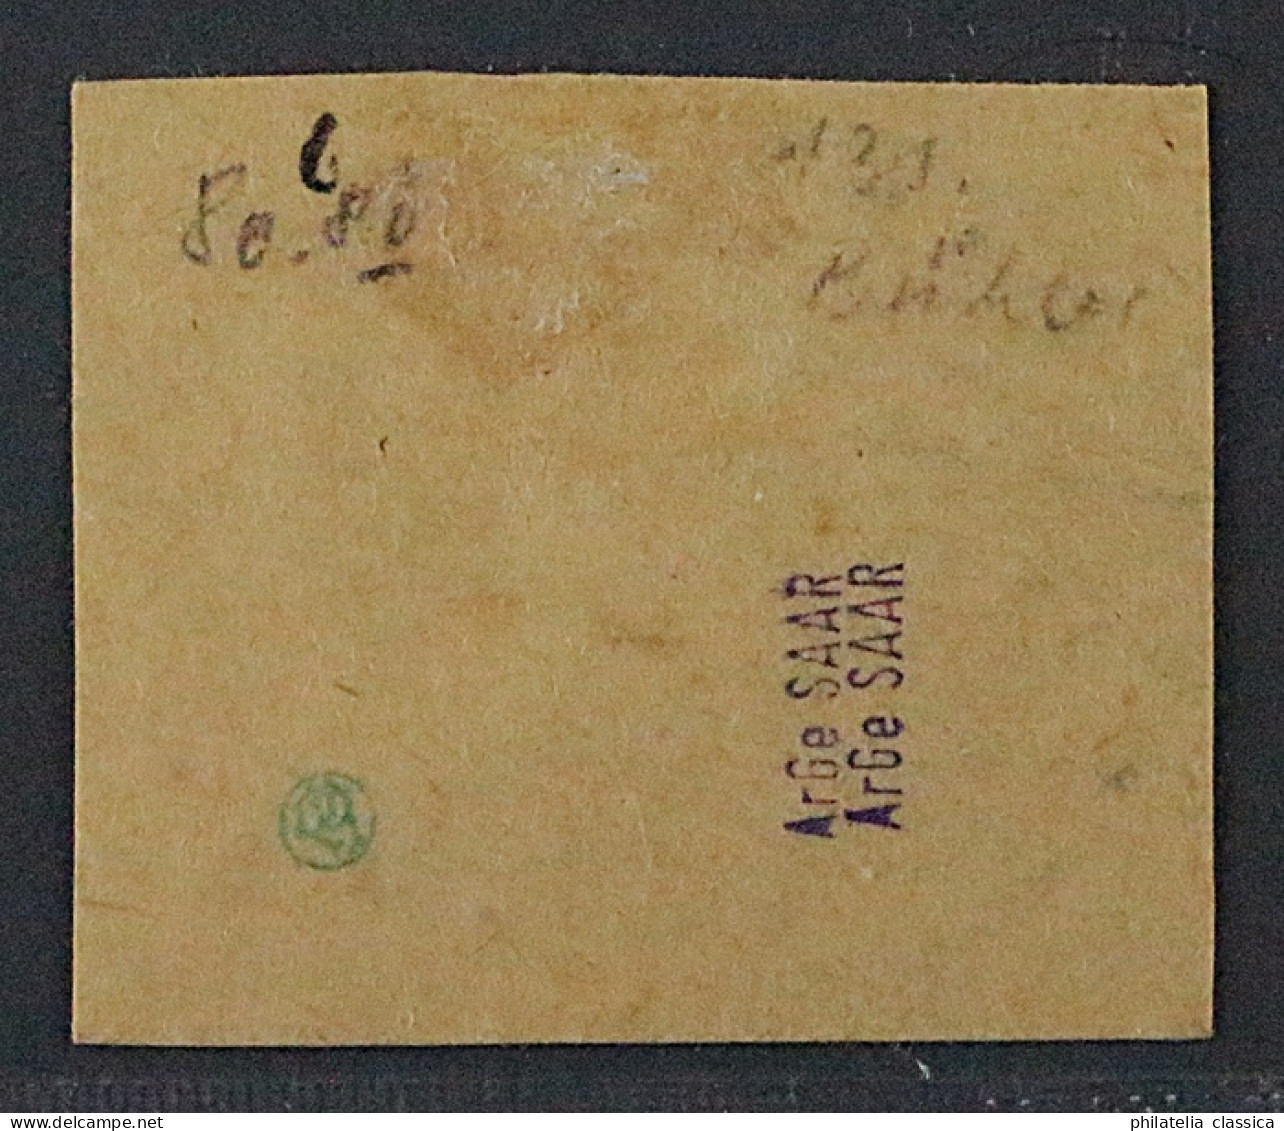 1920, SAAR 6 A I DD, Germania 10 Pfg. DOPPELAUFDRUCK, RARITÄT Fotoattest 1500,-€ - Used Stamps